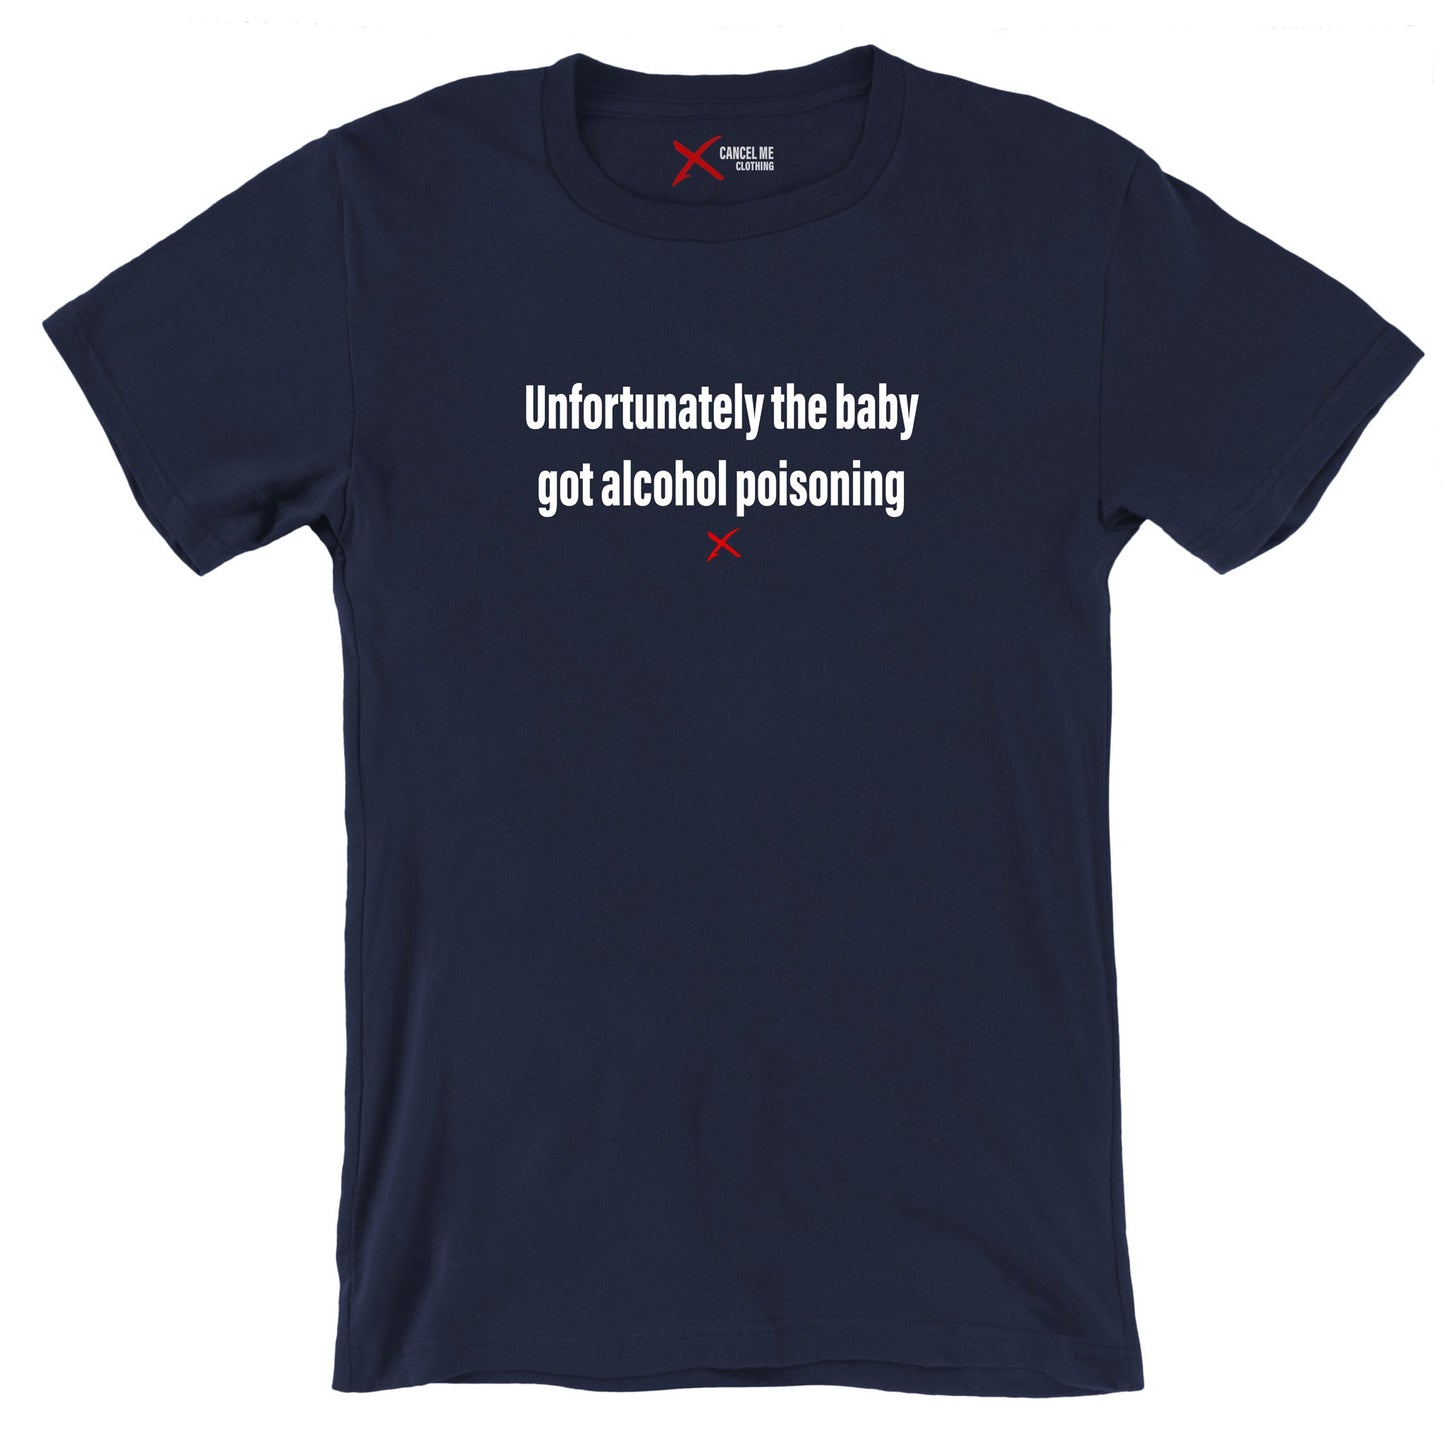 Unfortunately the baby got alcohol poisoning - Shirt